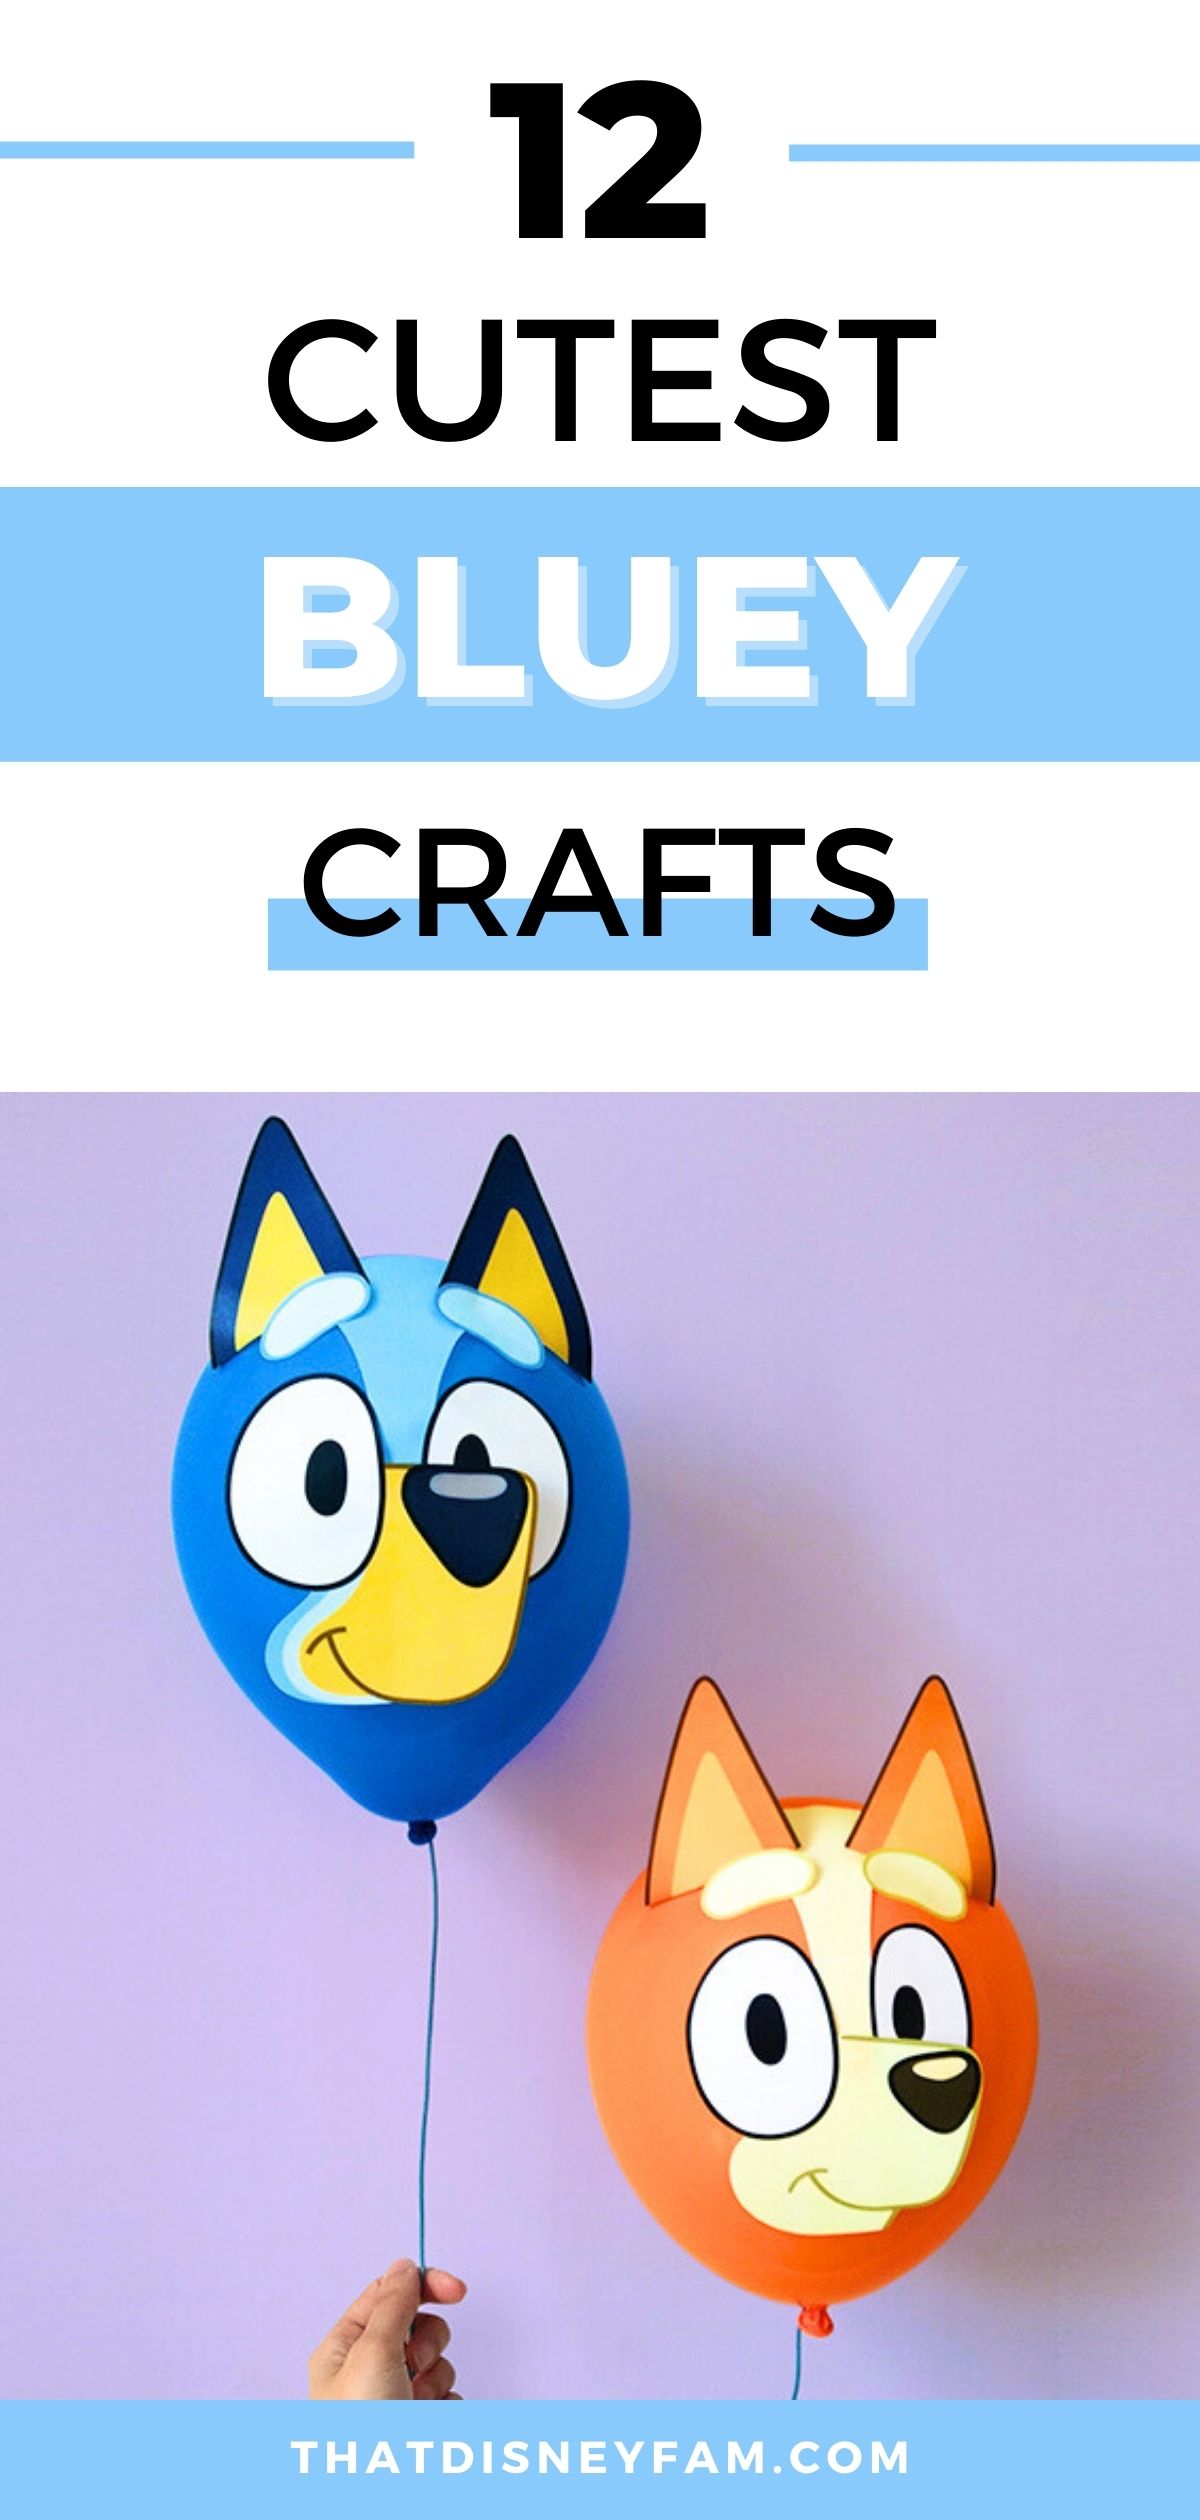 bluey crafts